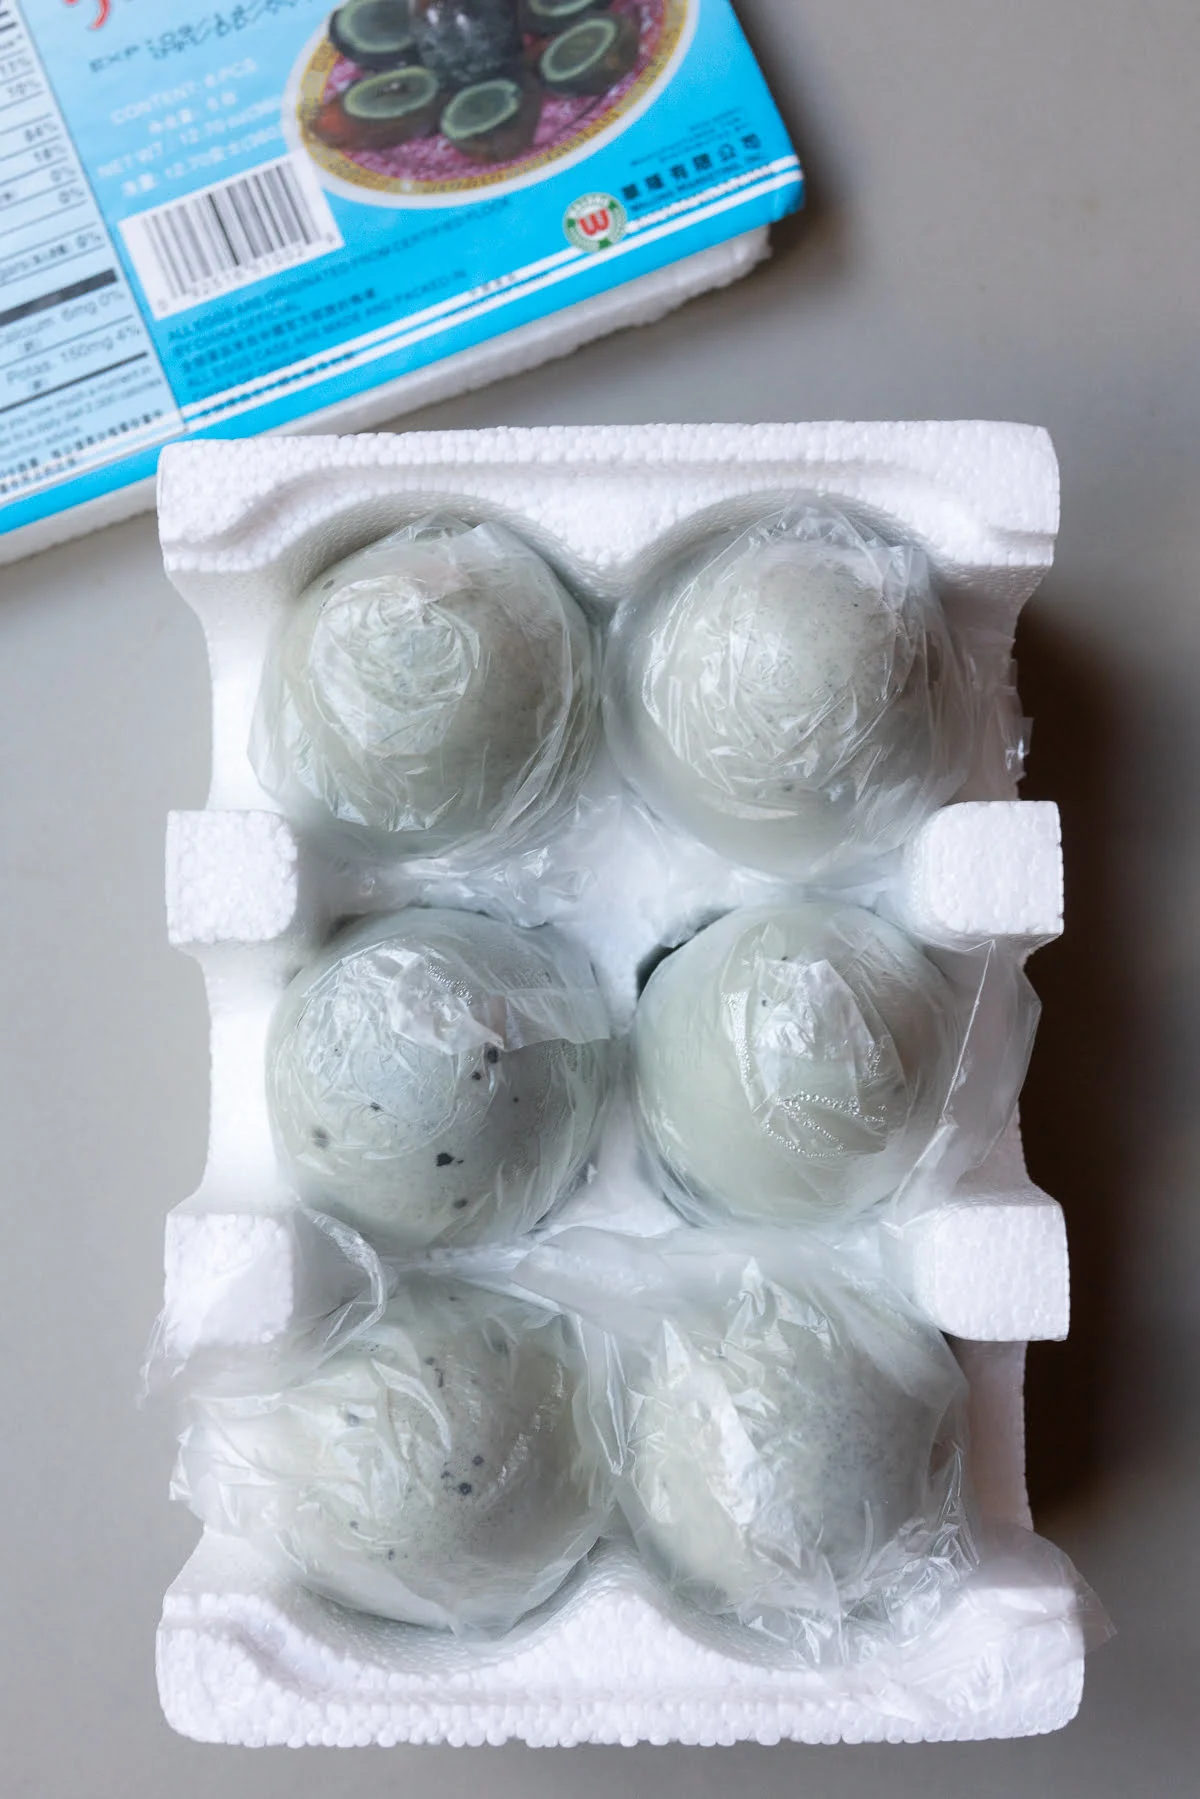 A box of unpeeled century eggs.